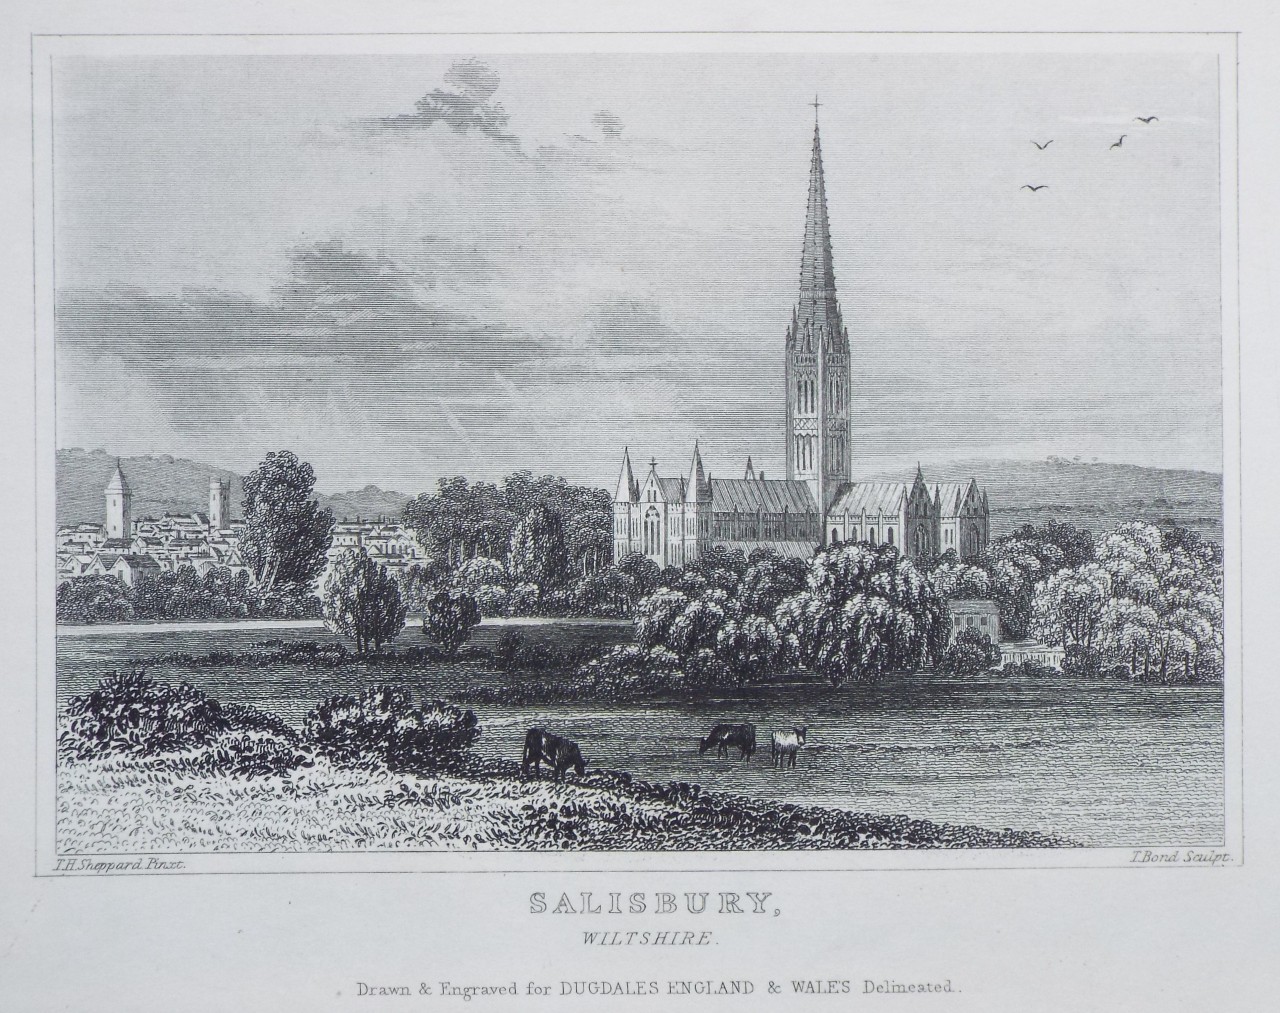 Print - Salisbury, Wiltshire. - Bond